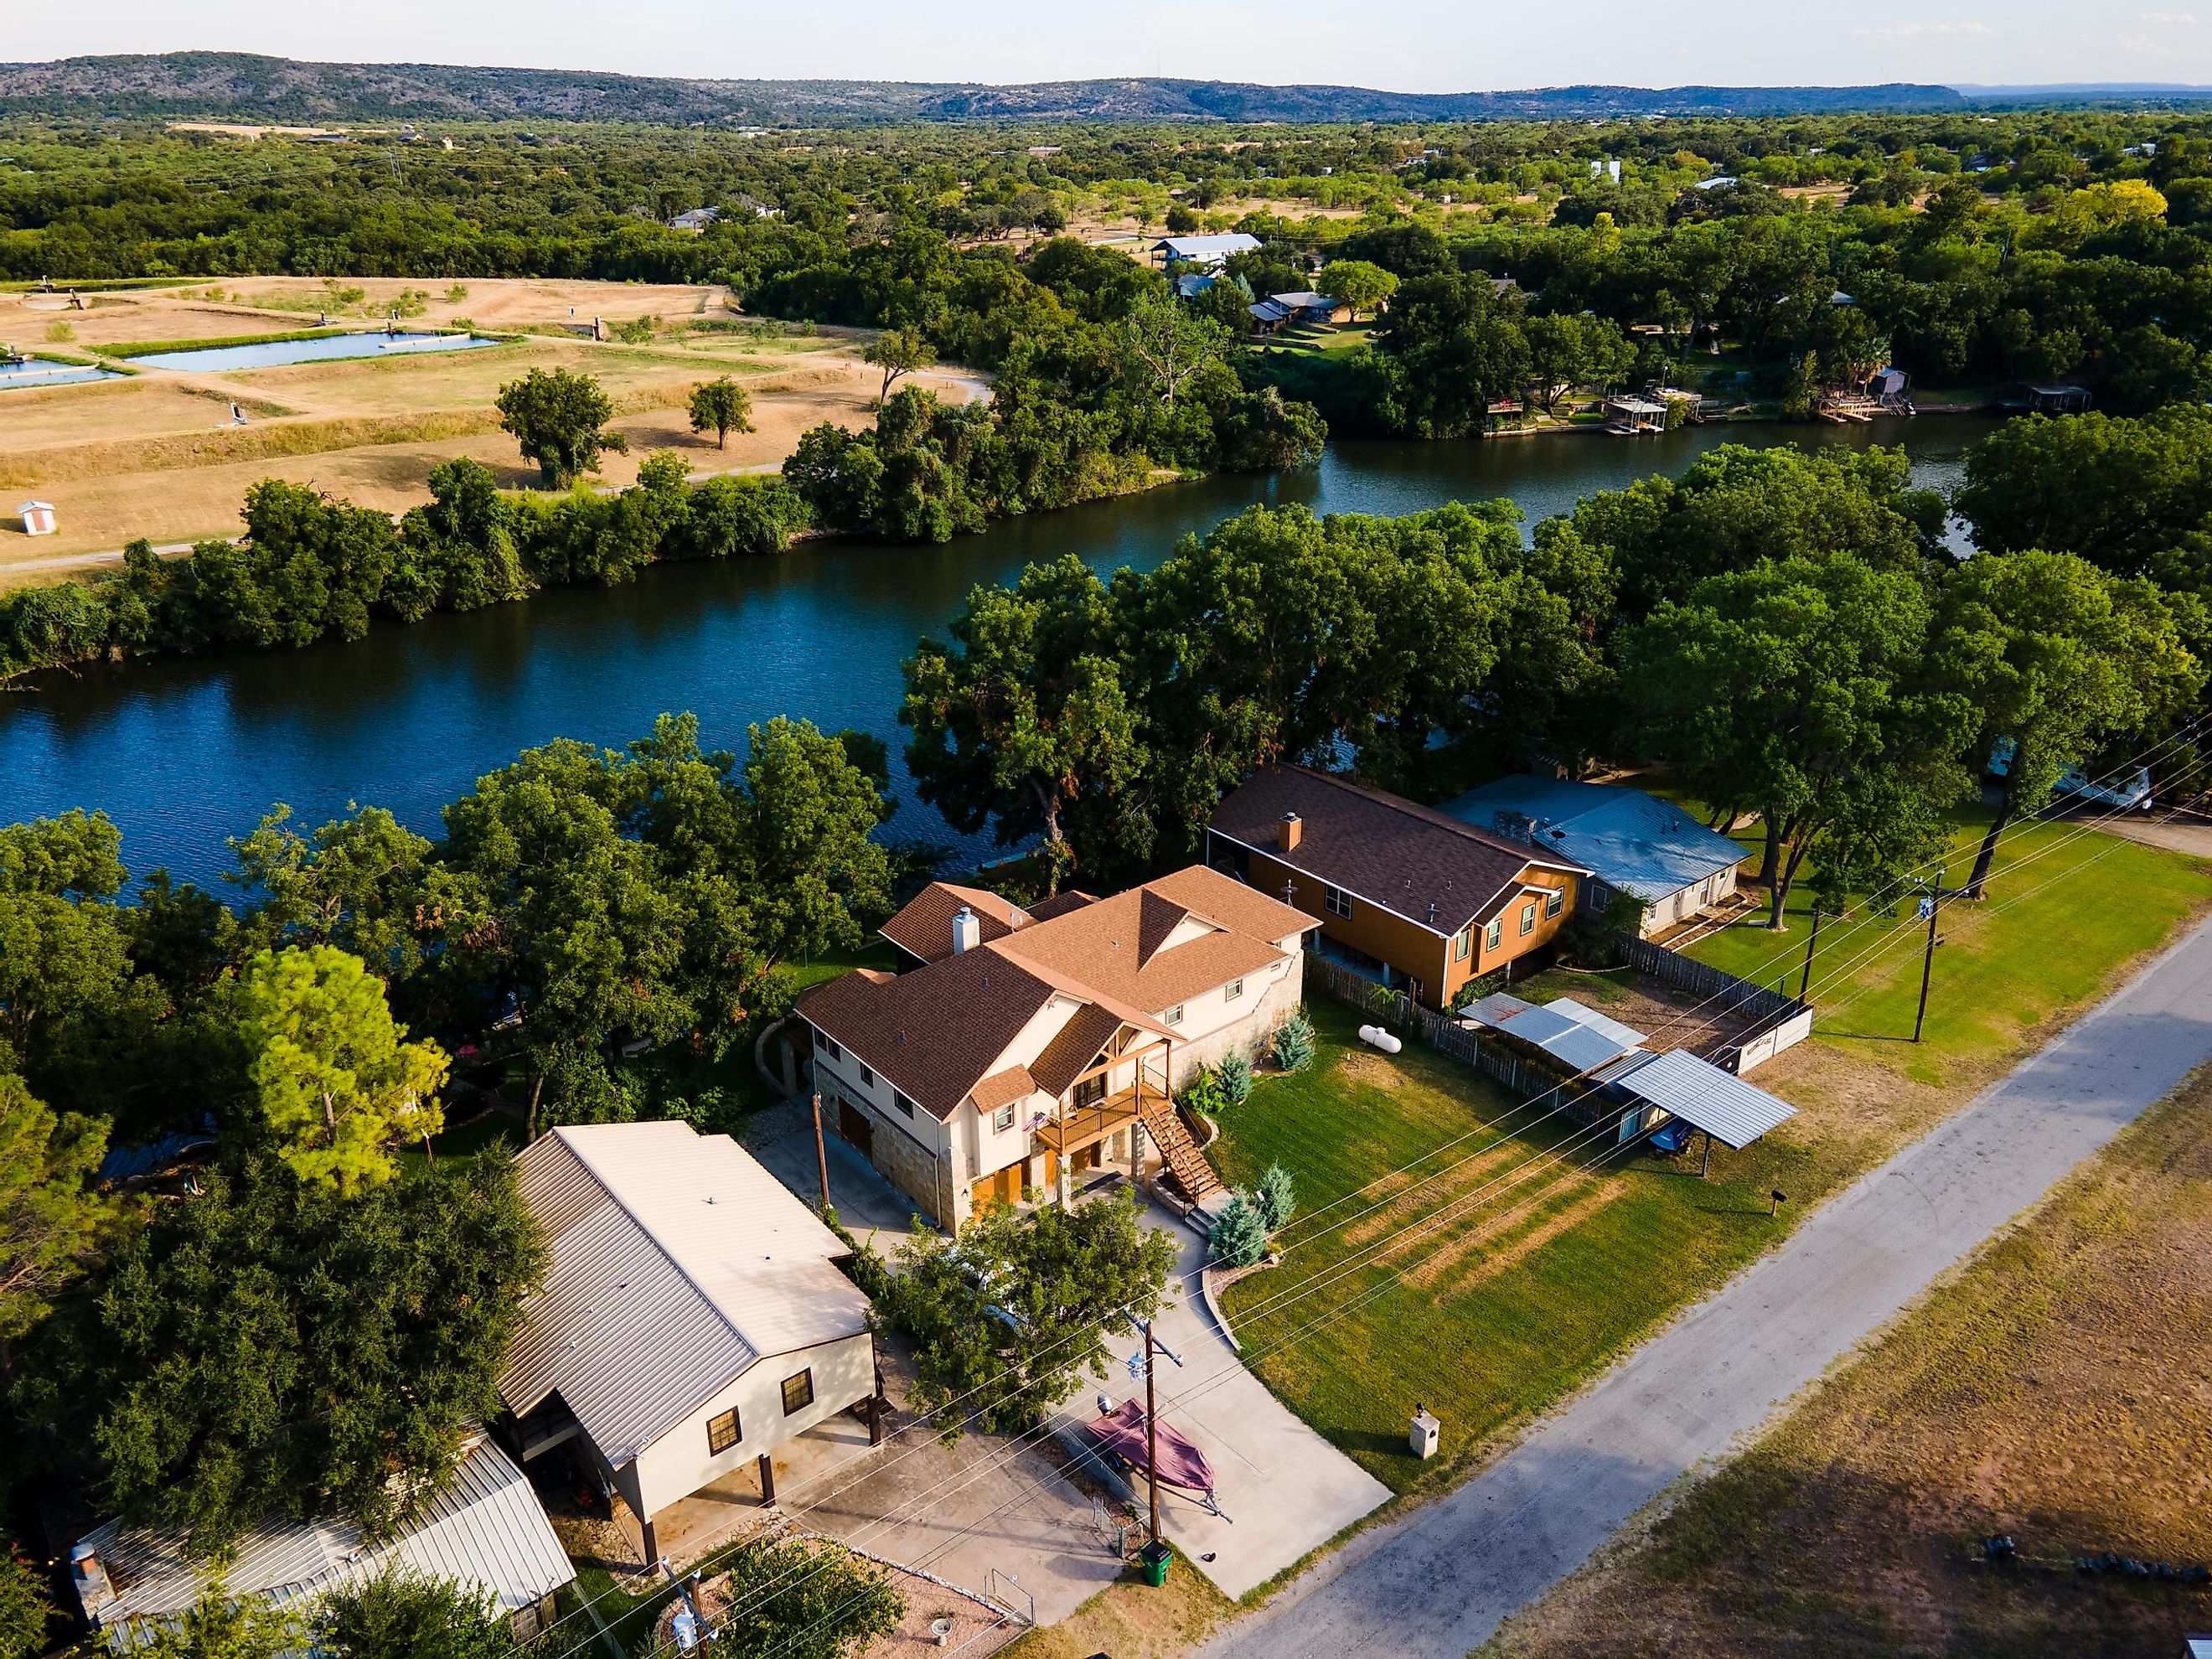 Aerial view of vacation homes near Burnet, Texas.